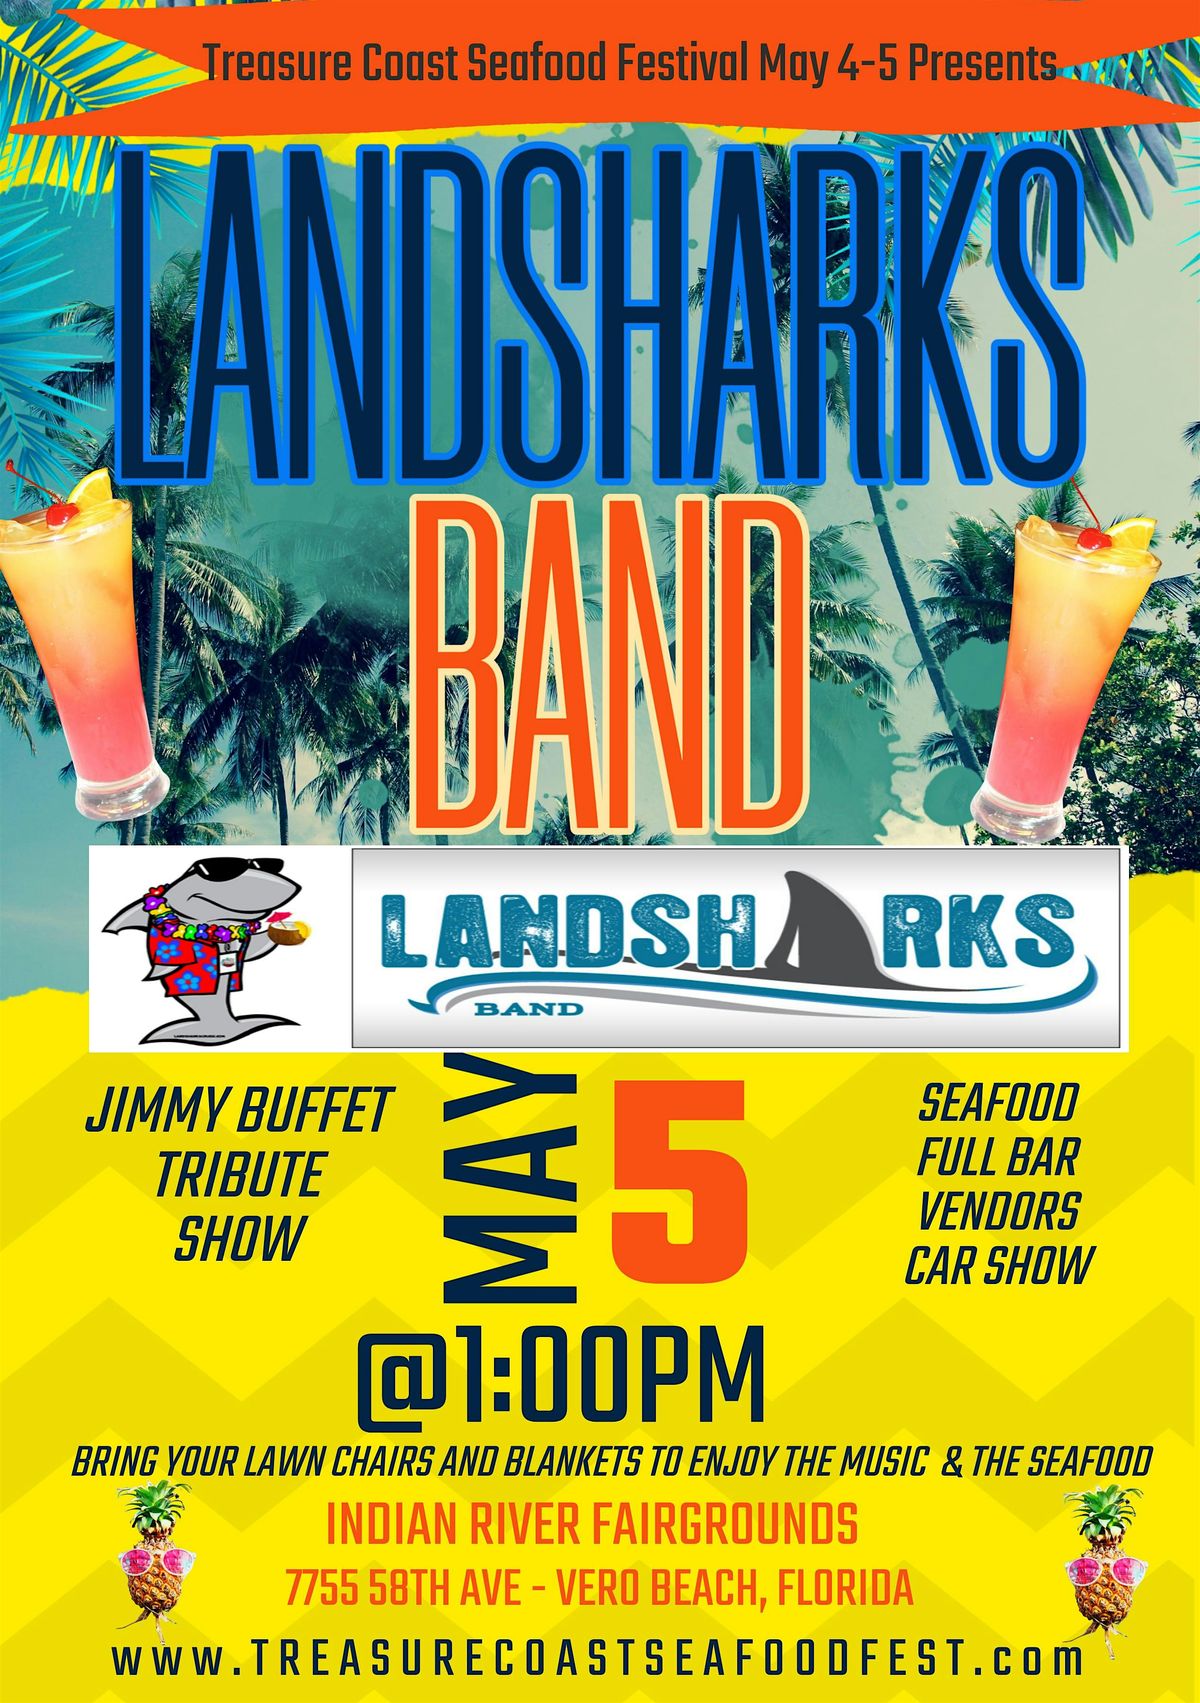 The Landsharks Band Brings a Jimmy Buffett Tribute  to the Treasure Coast